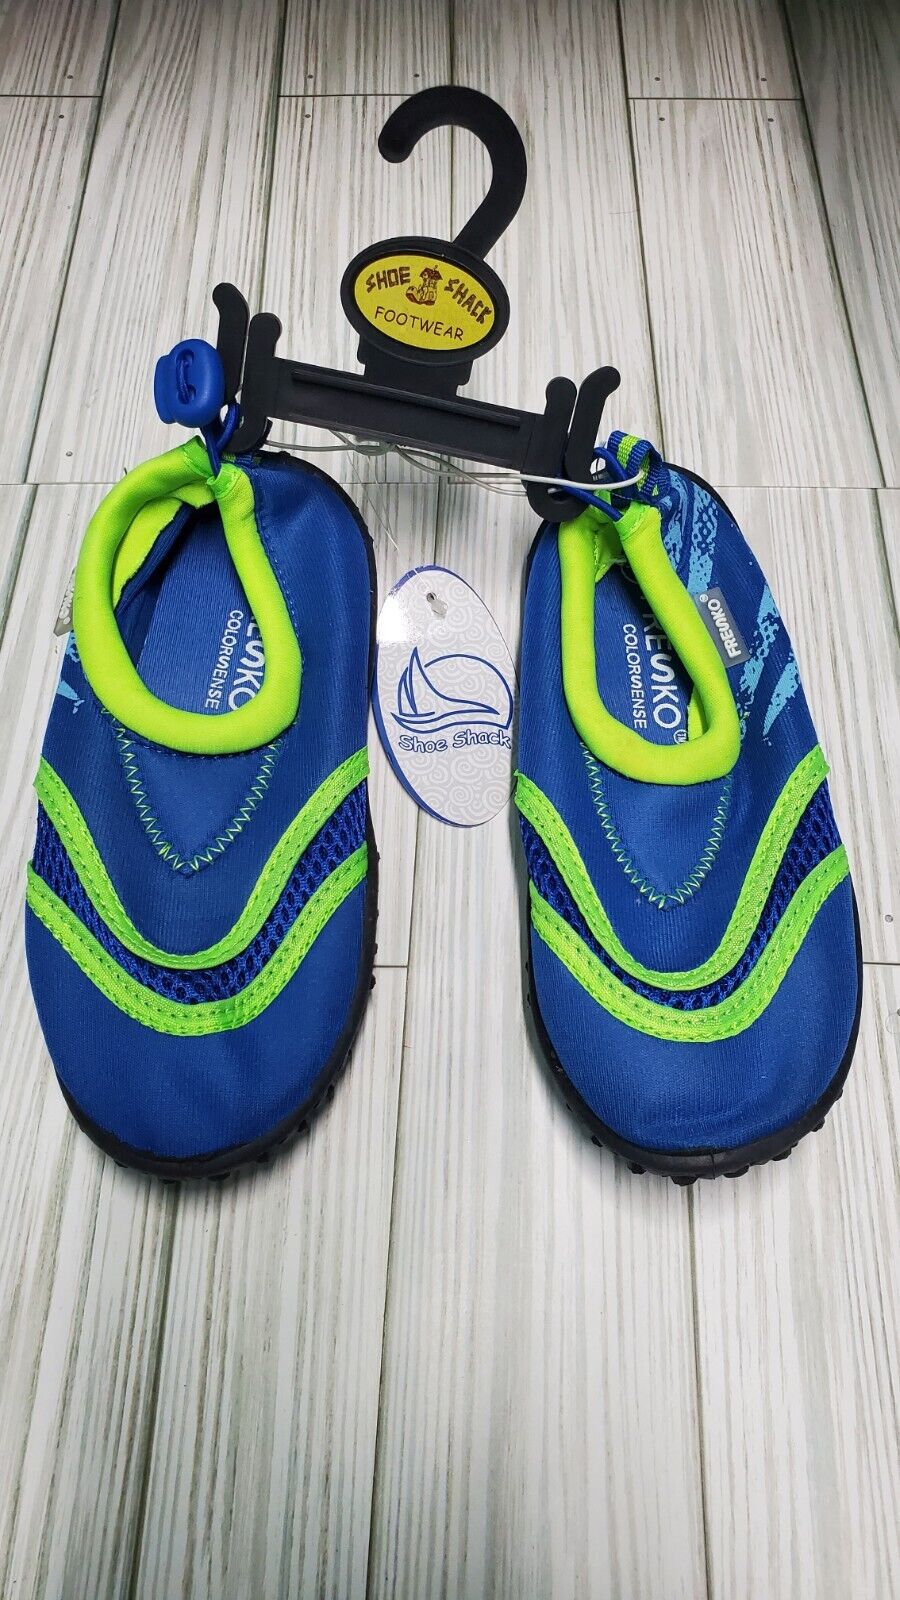 Fresko Colorsense Water Aqua Kids Shoes Size Us 13, Eur 31